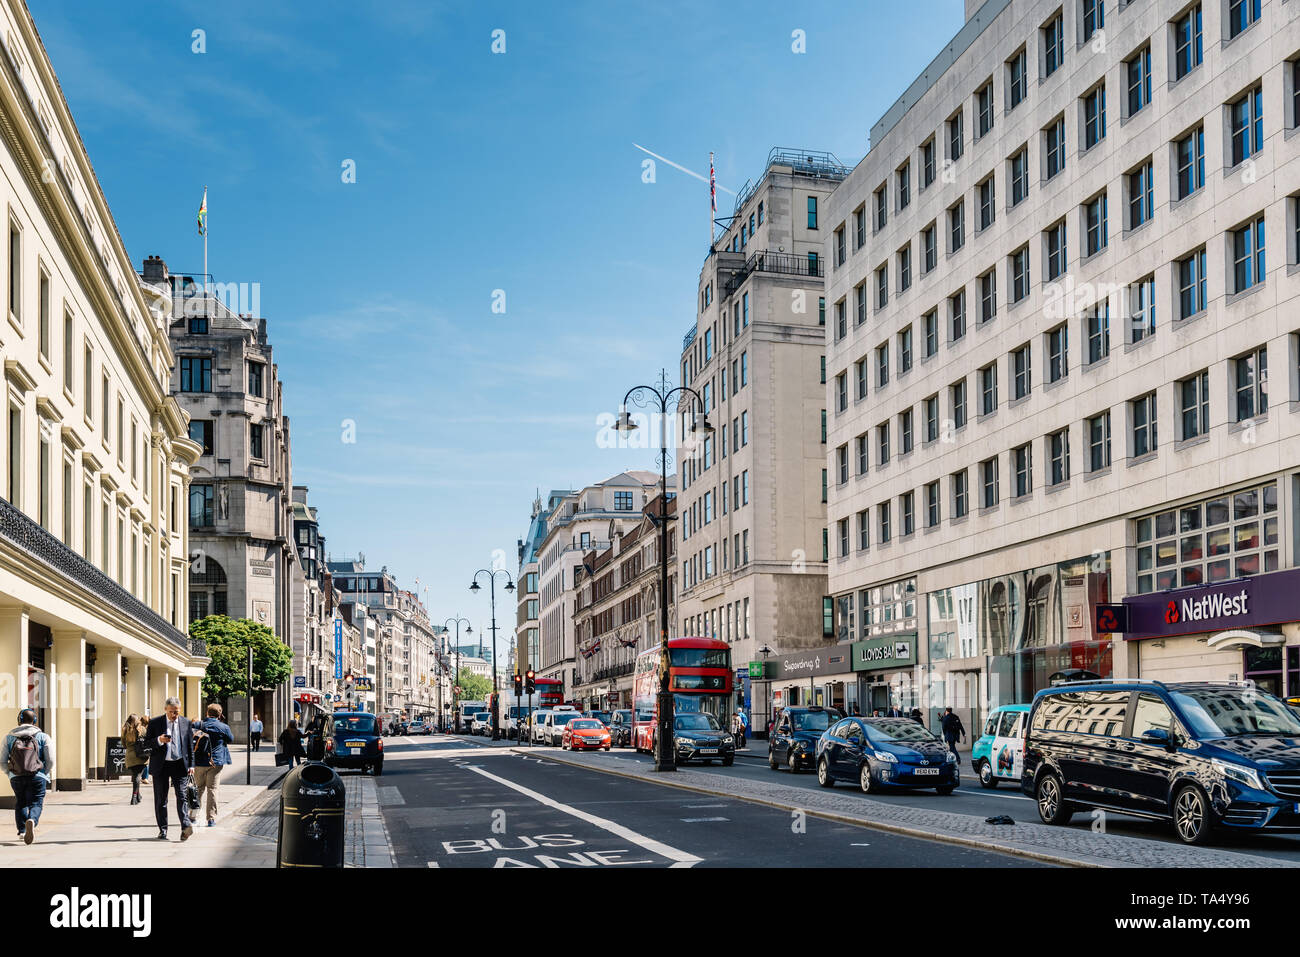 London, UK - May 14, 2019: Busy London street scene on The Strand, a major London road near Trafalgar Square Stock Photo